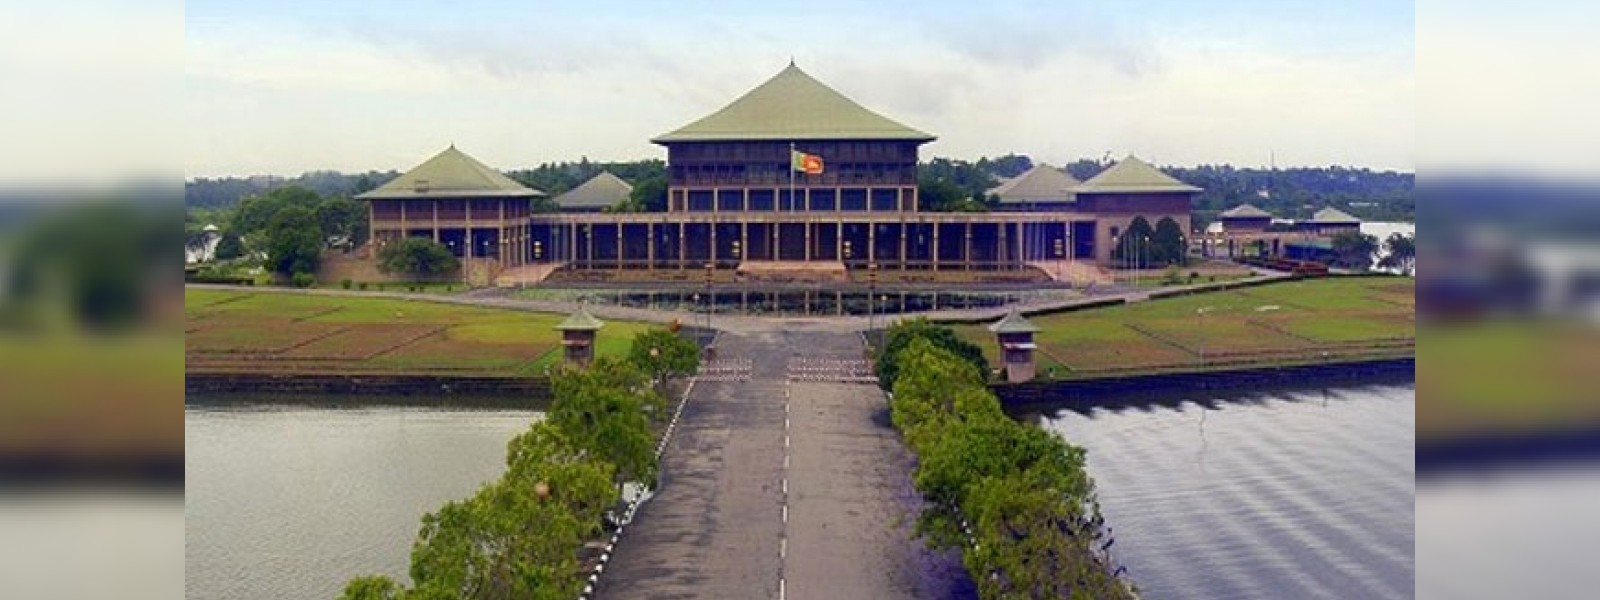 Committee probing Parliament brawl to convene 